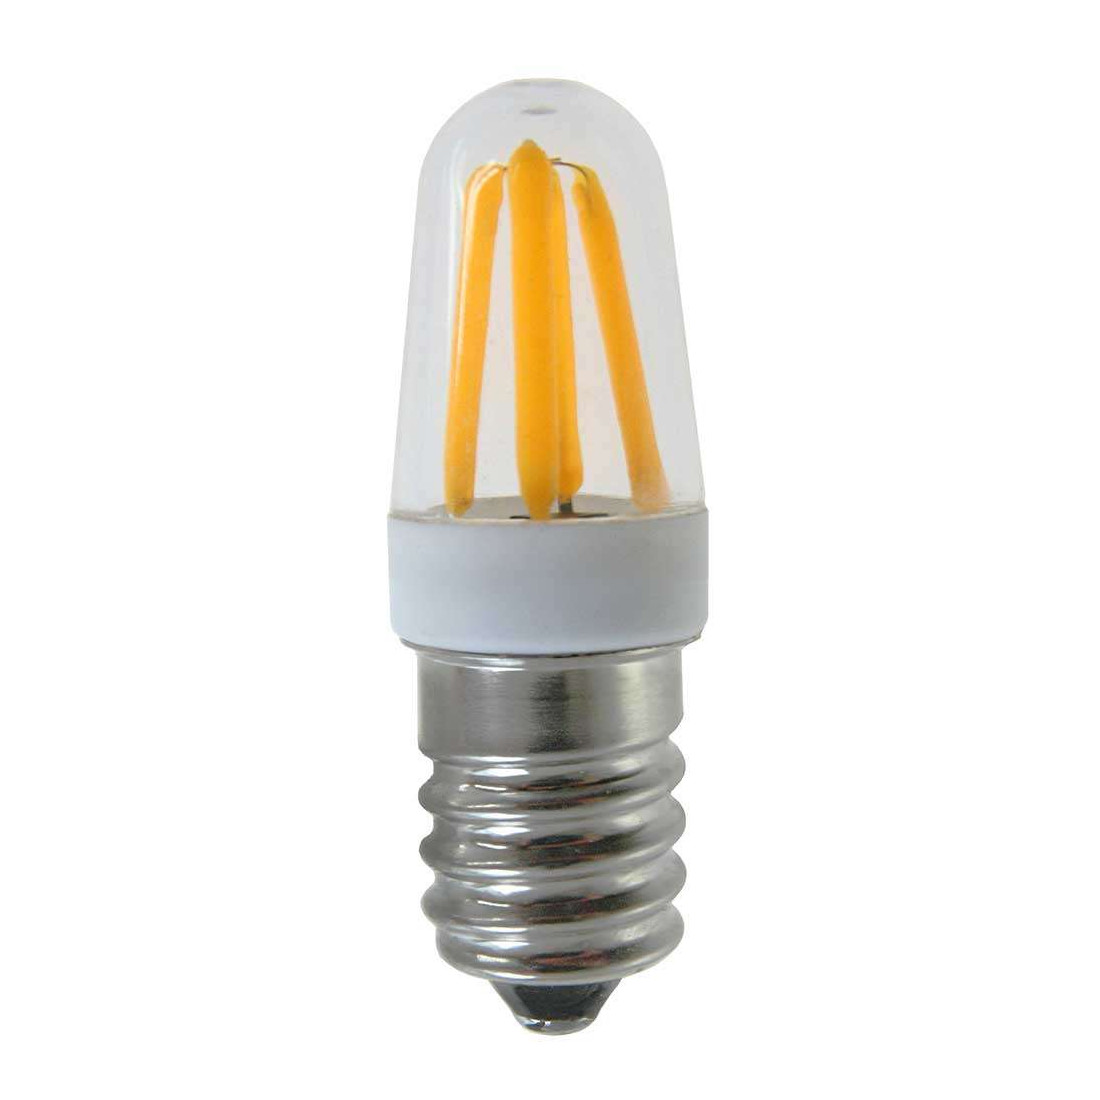 Ampoule LED Dimmable APIA - E14 - Intensité moyenne - Blanc chaud